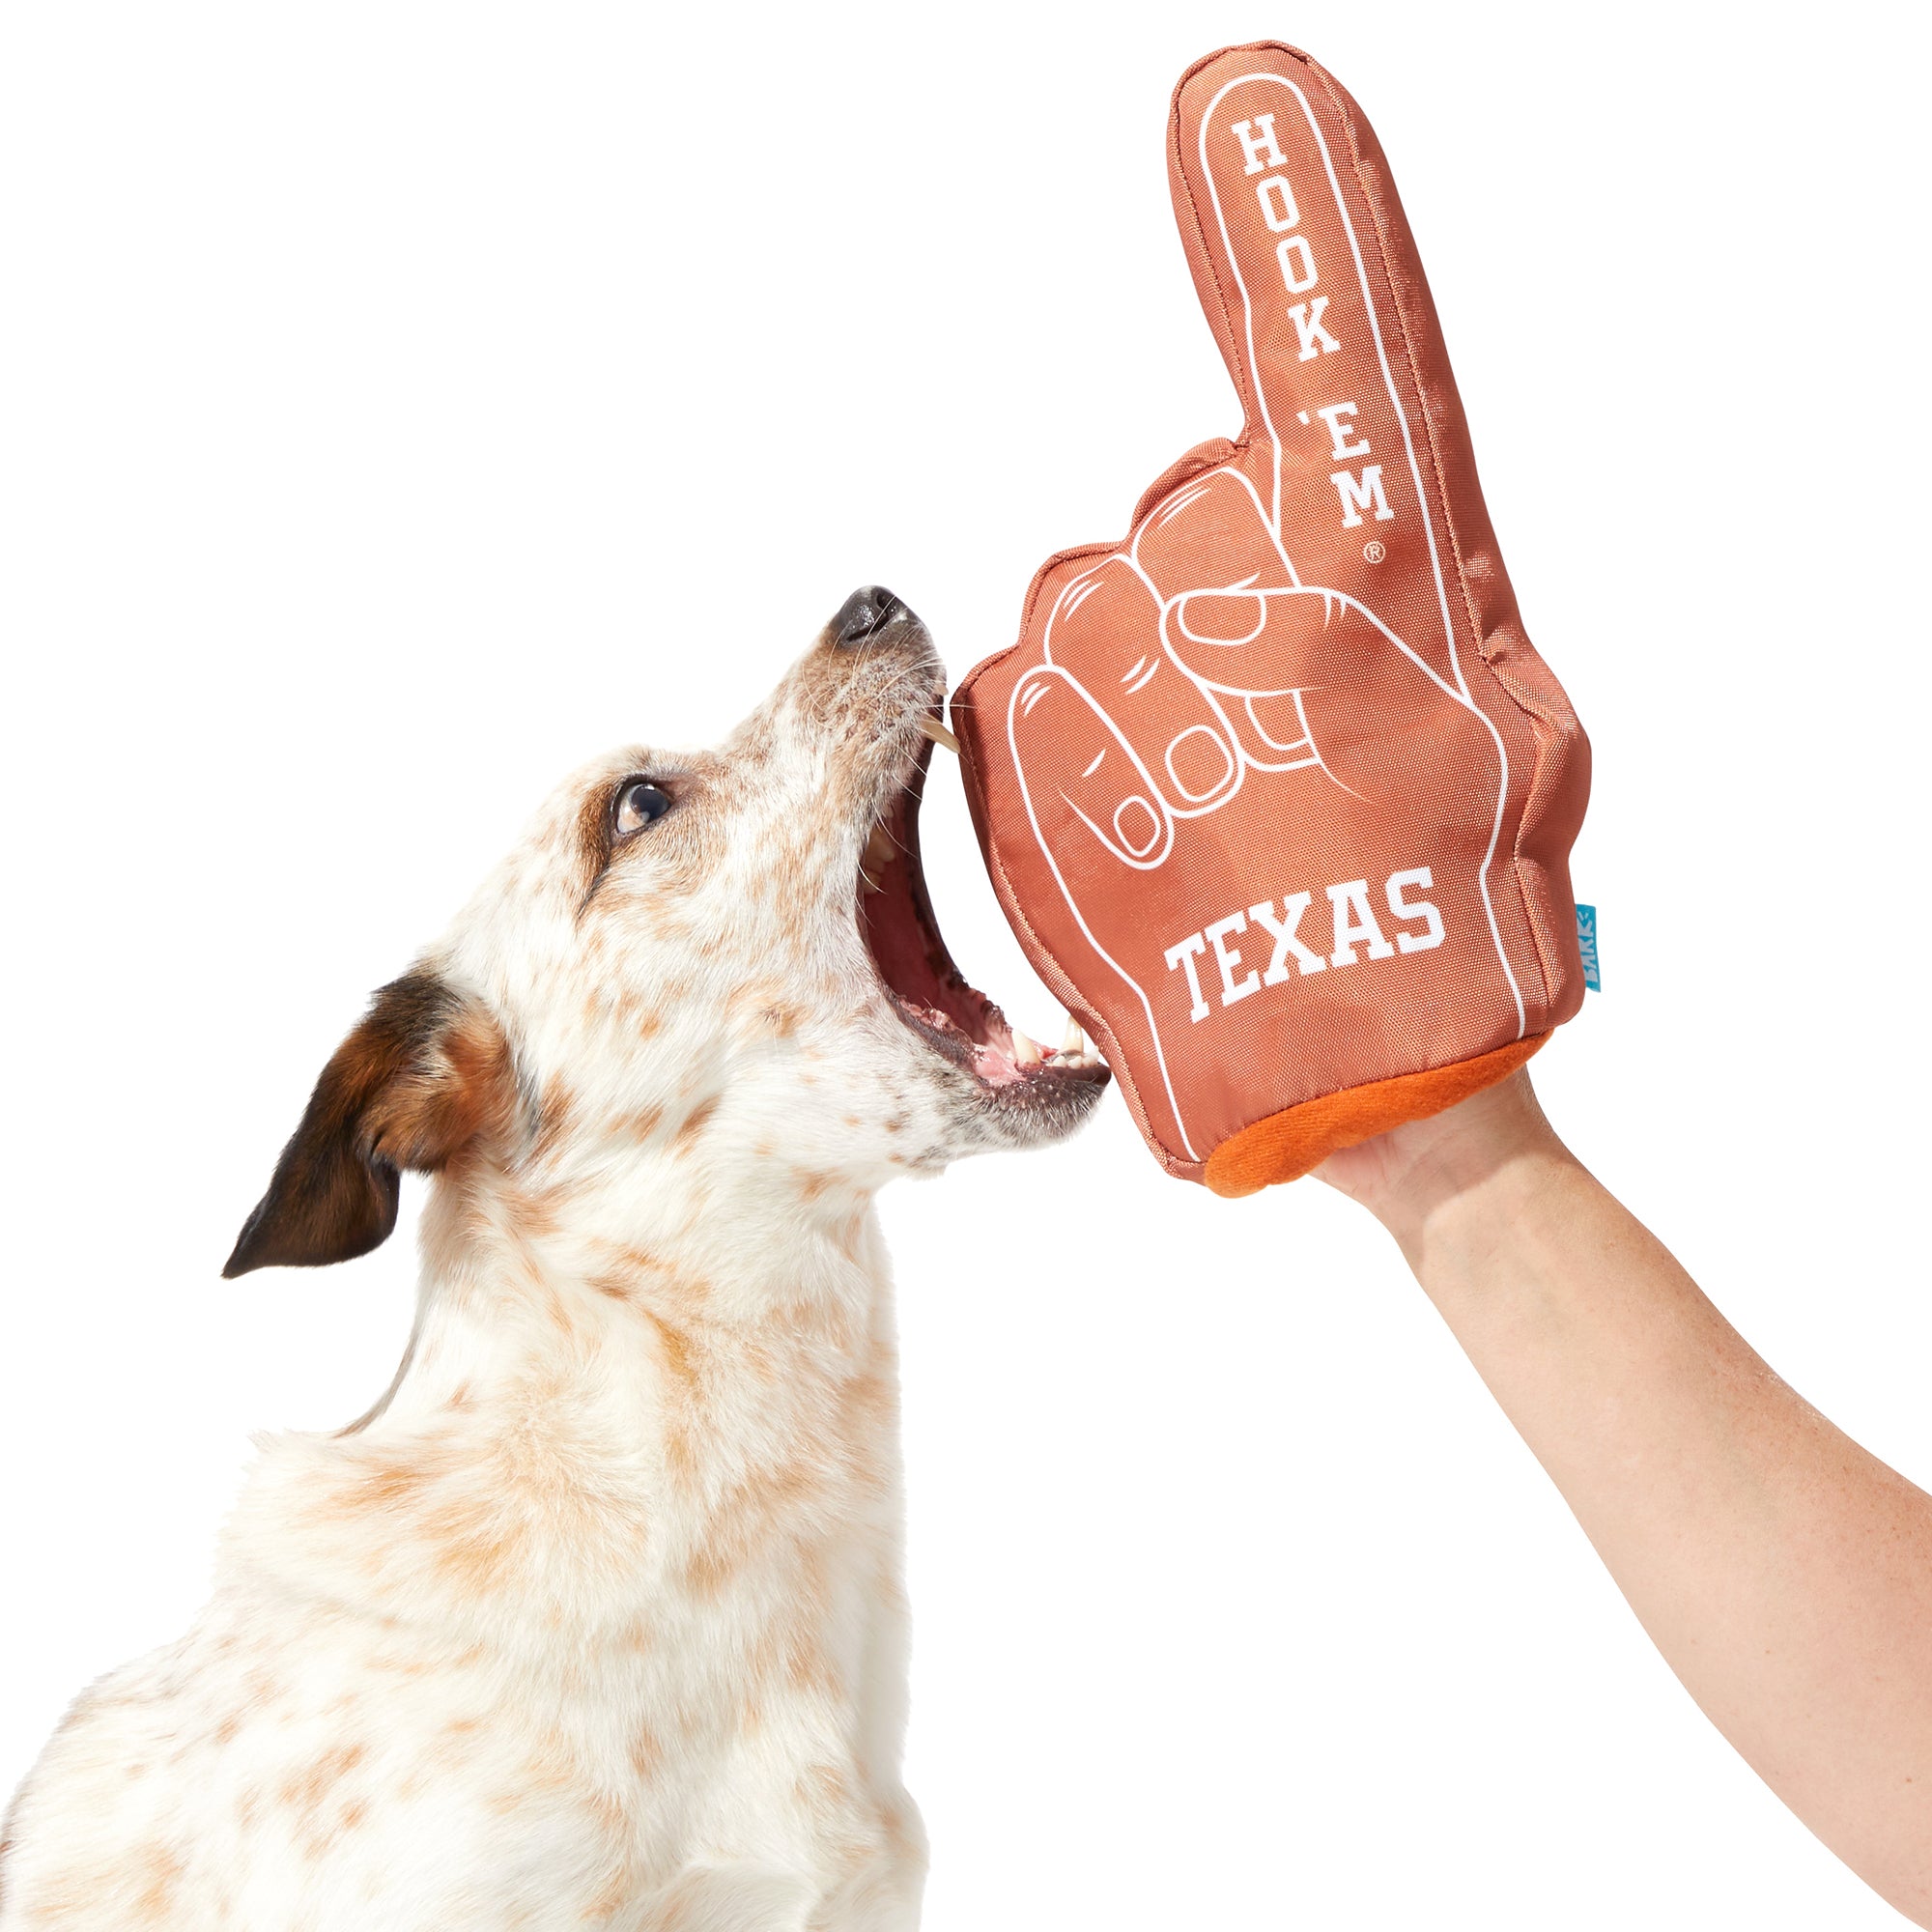 Texas Top Dog Toy